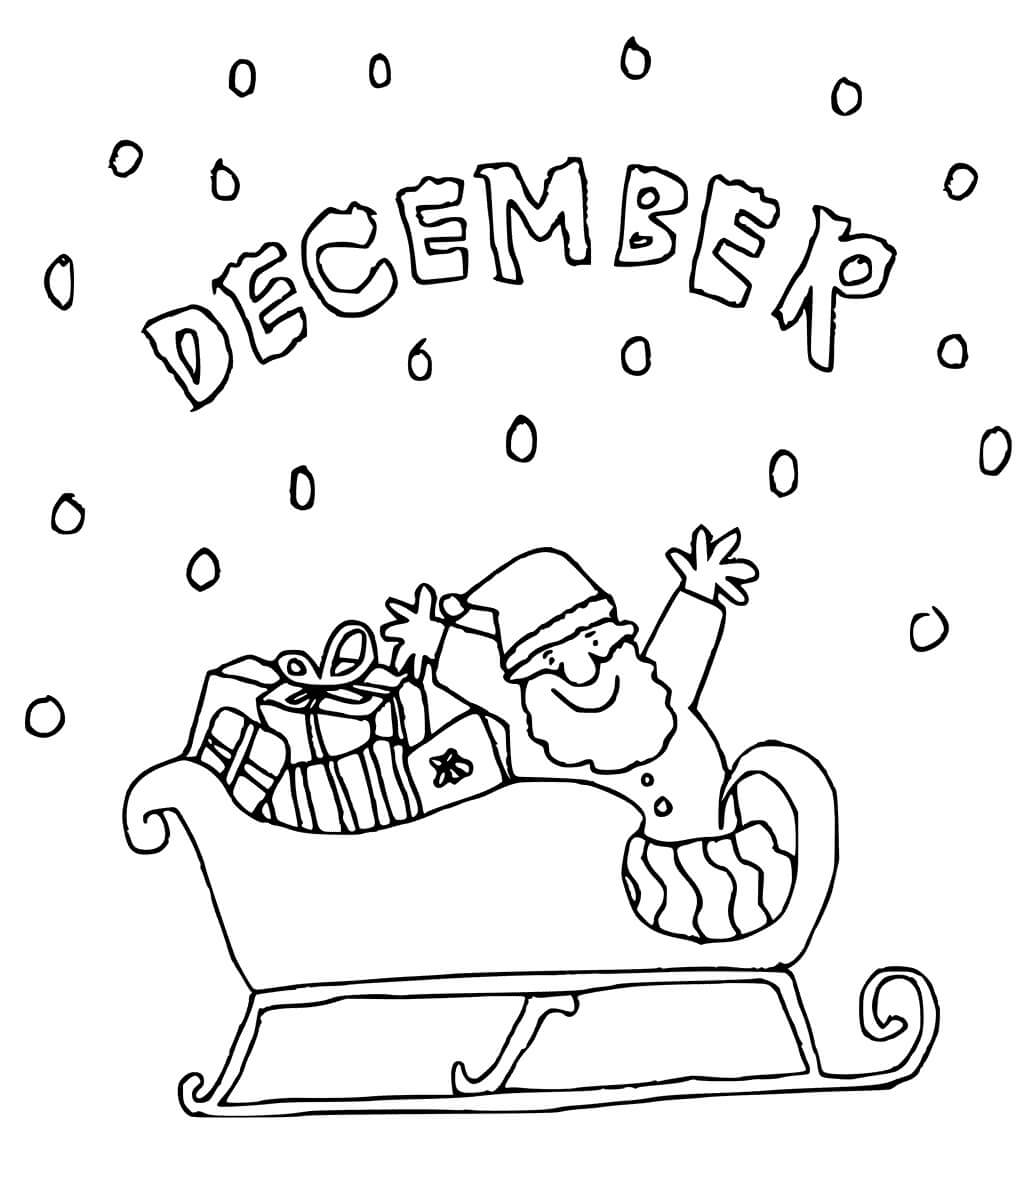 Santa and December